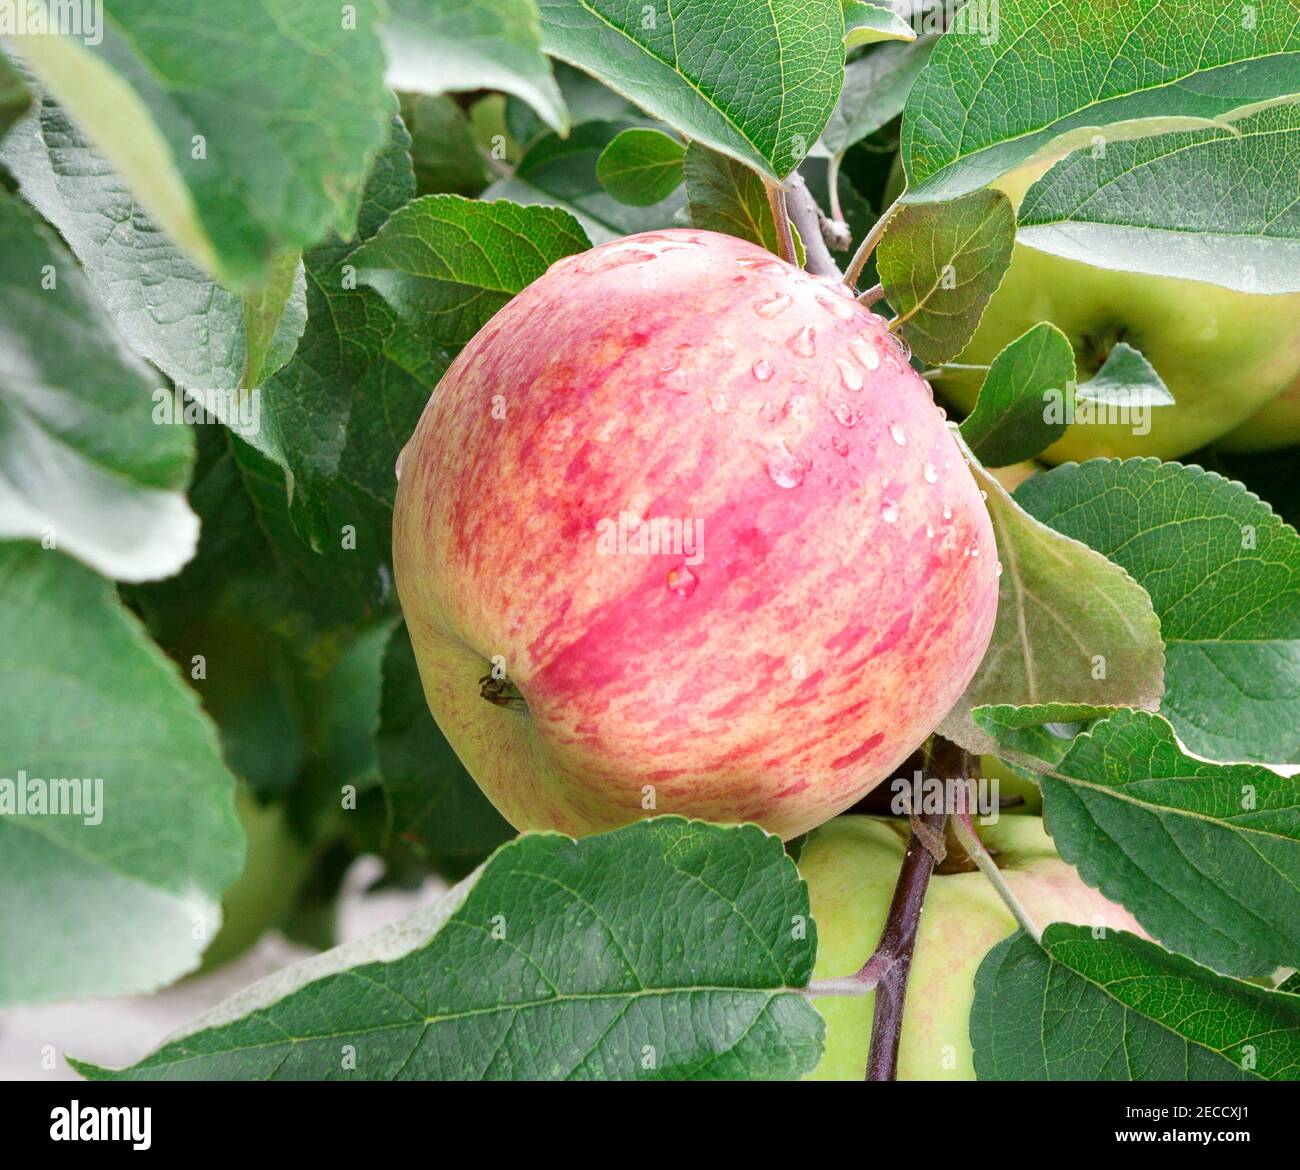 Apple tree with ripe apple fruit. Ripe apples growing on apple tree branch. Apple on tree after rain, close-up. Stock Photo